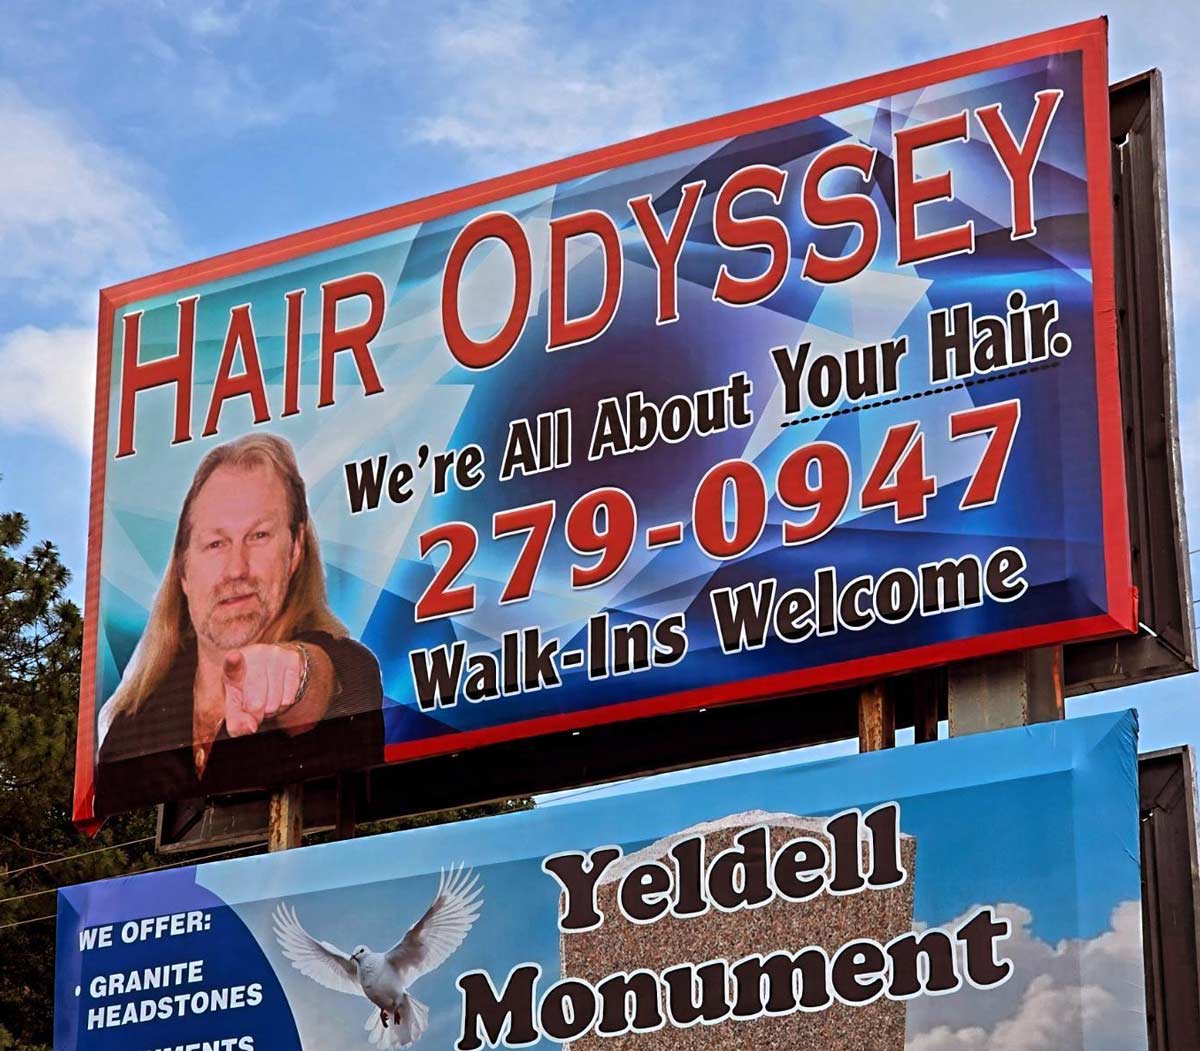 Hair Odyssey Alabama